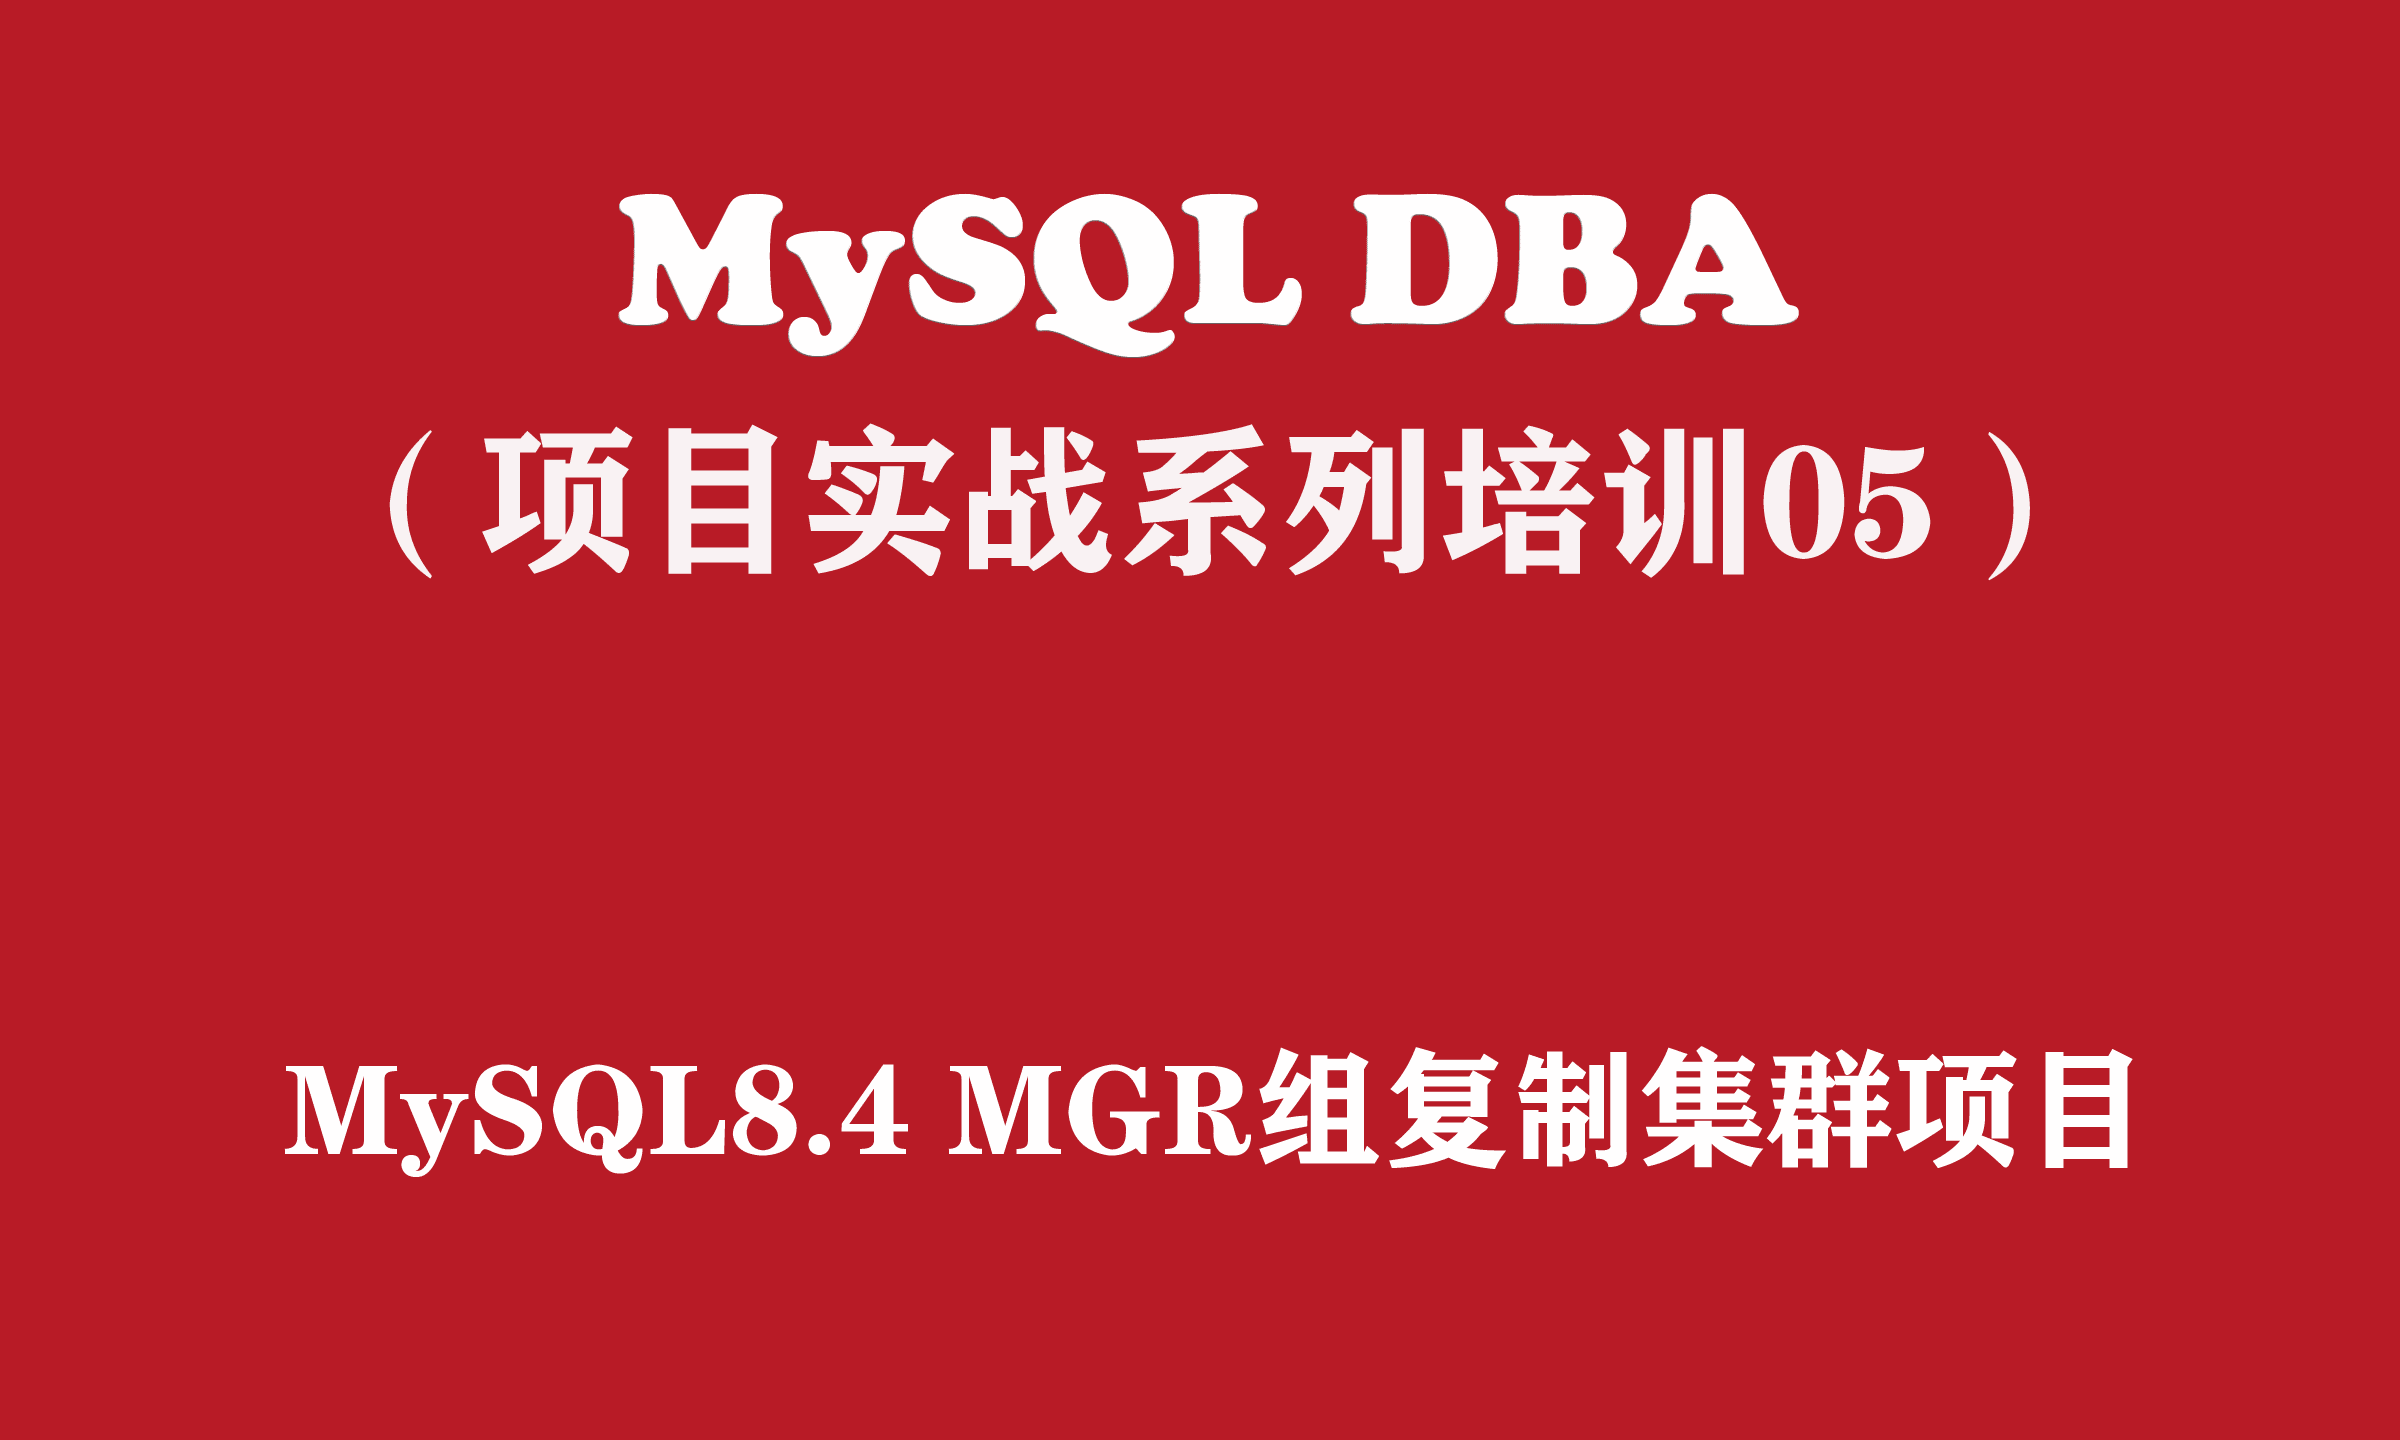  MySQL 8.4 MGR Group Replication Cluster Project Practice [MySQL DBA Practice Training Series 05]